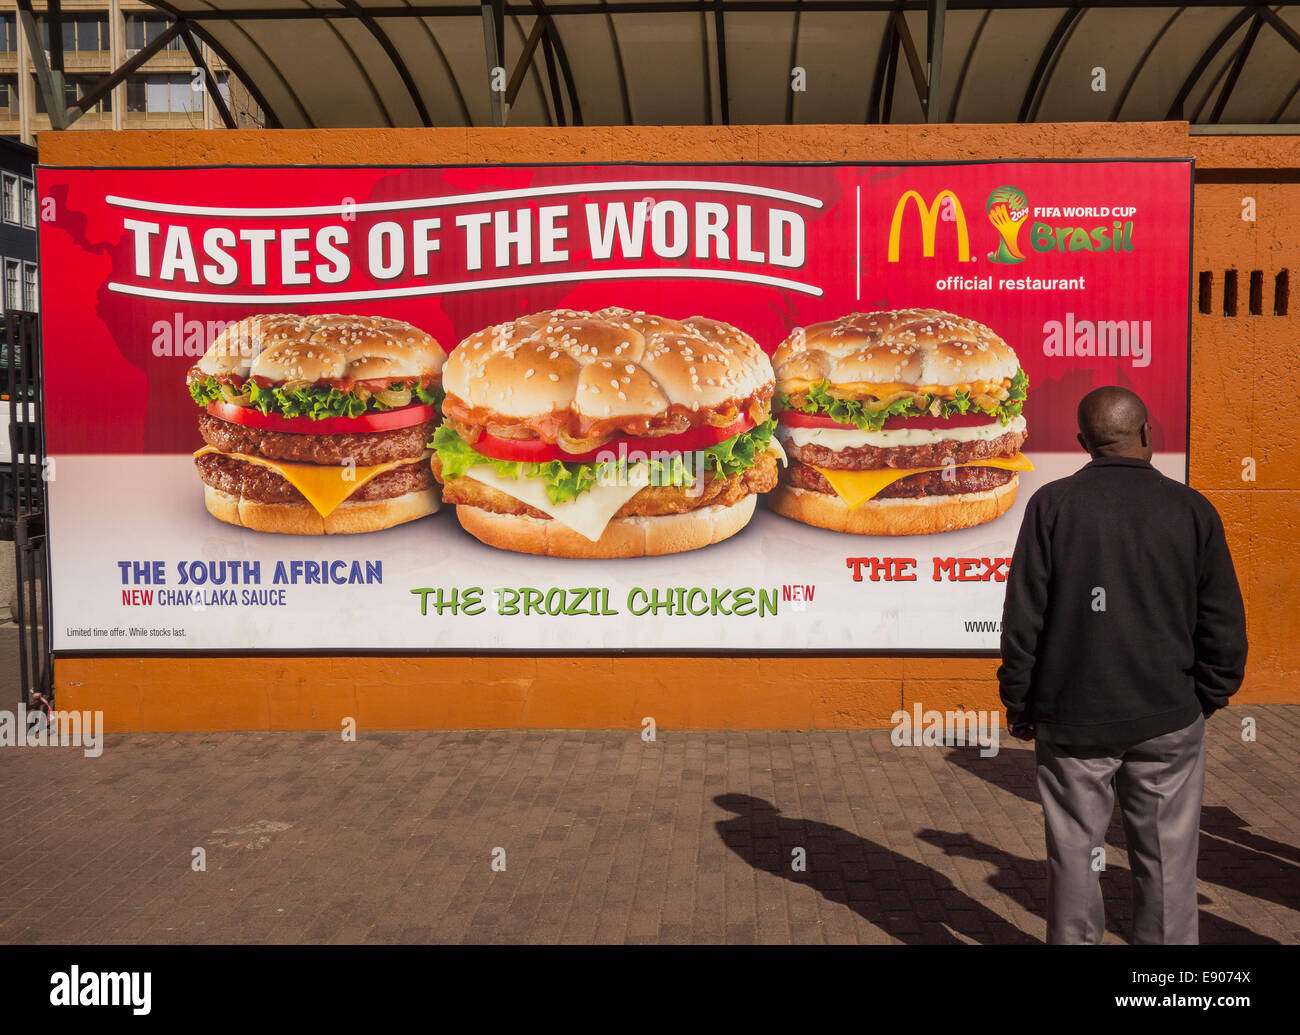 JOHANNESBURG, SOUTH AFRICA -McDonald's Restaurant billboard and man. Tastes of the World hamburger promotion. Stock Photo